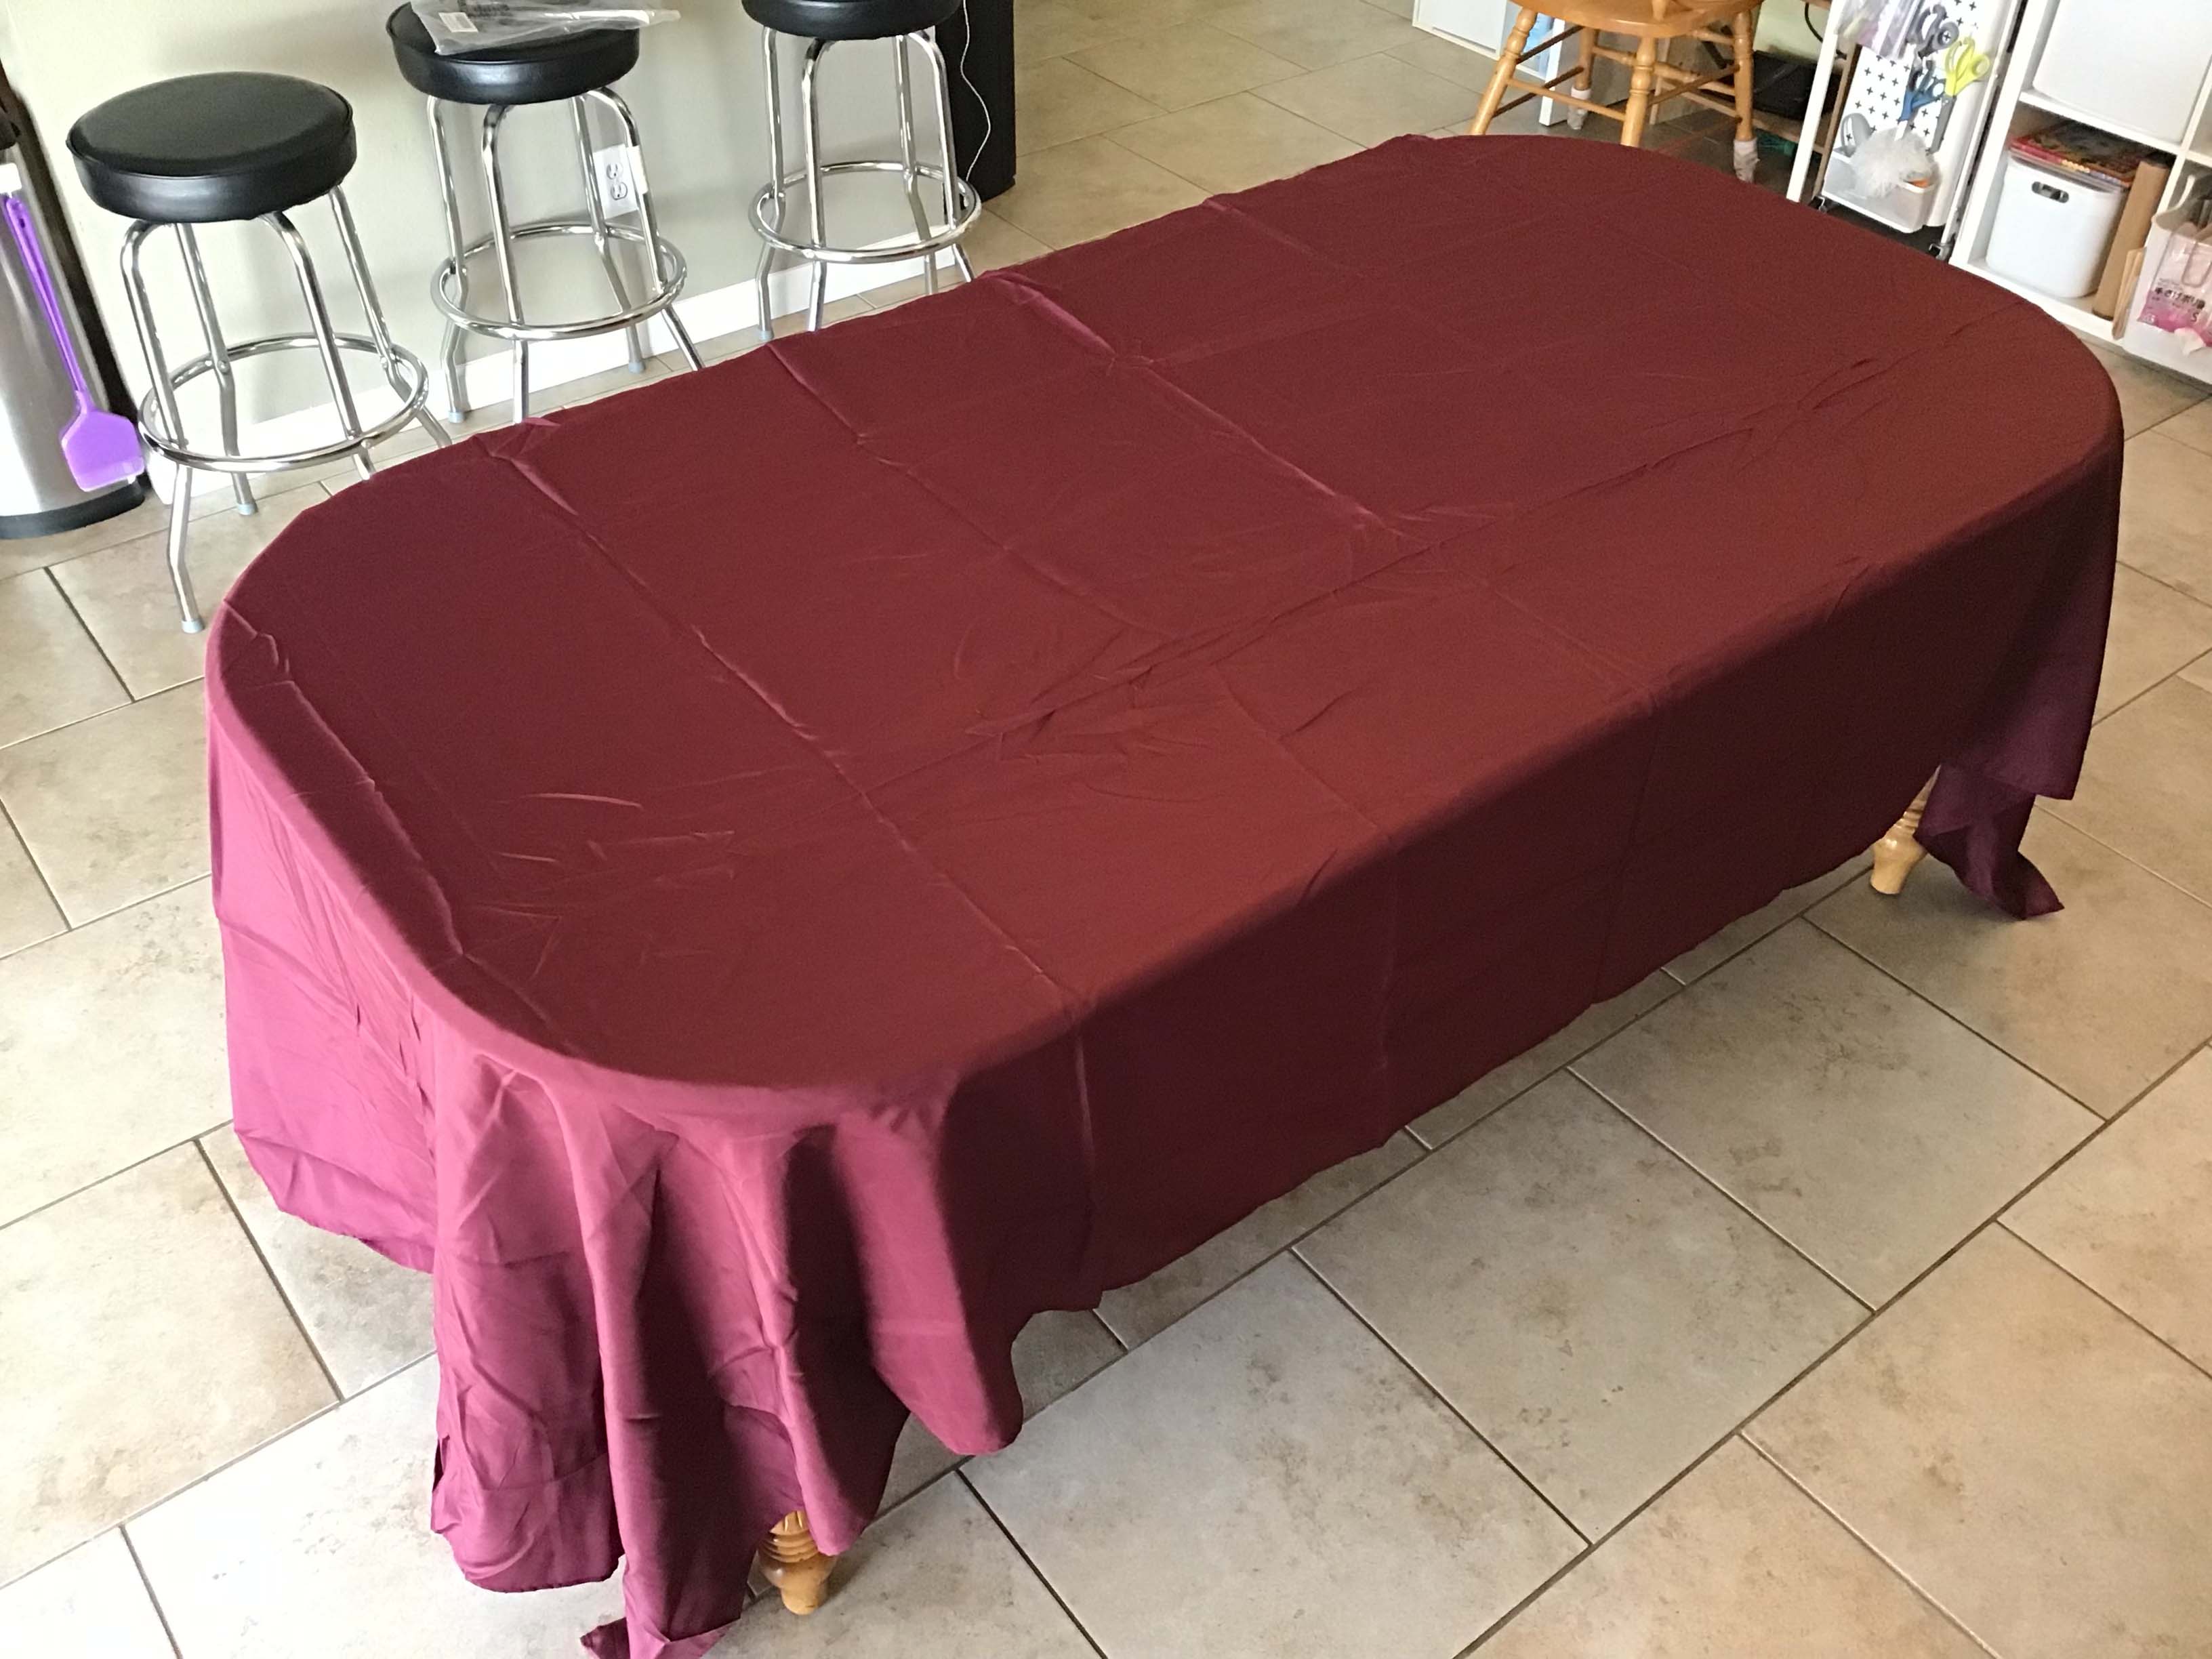 rectangle tablecloths (burgundy) - 60 x 126